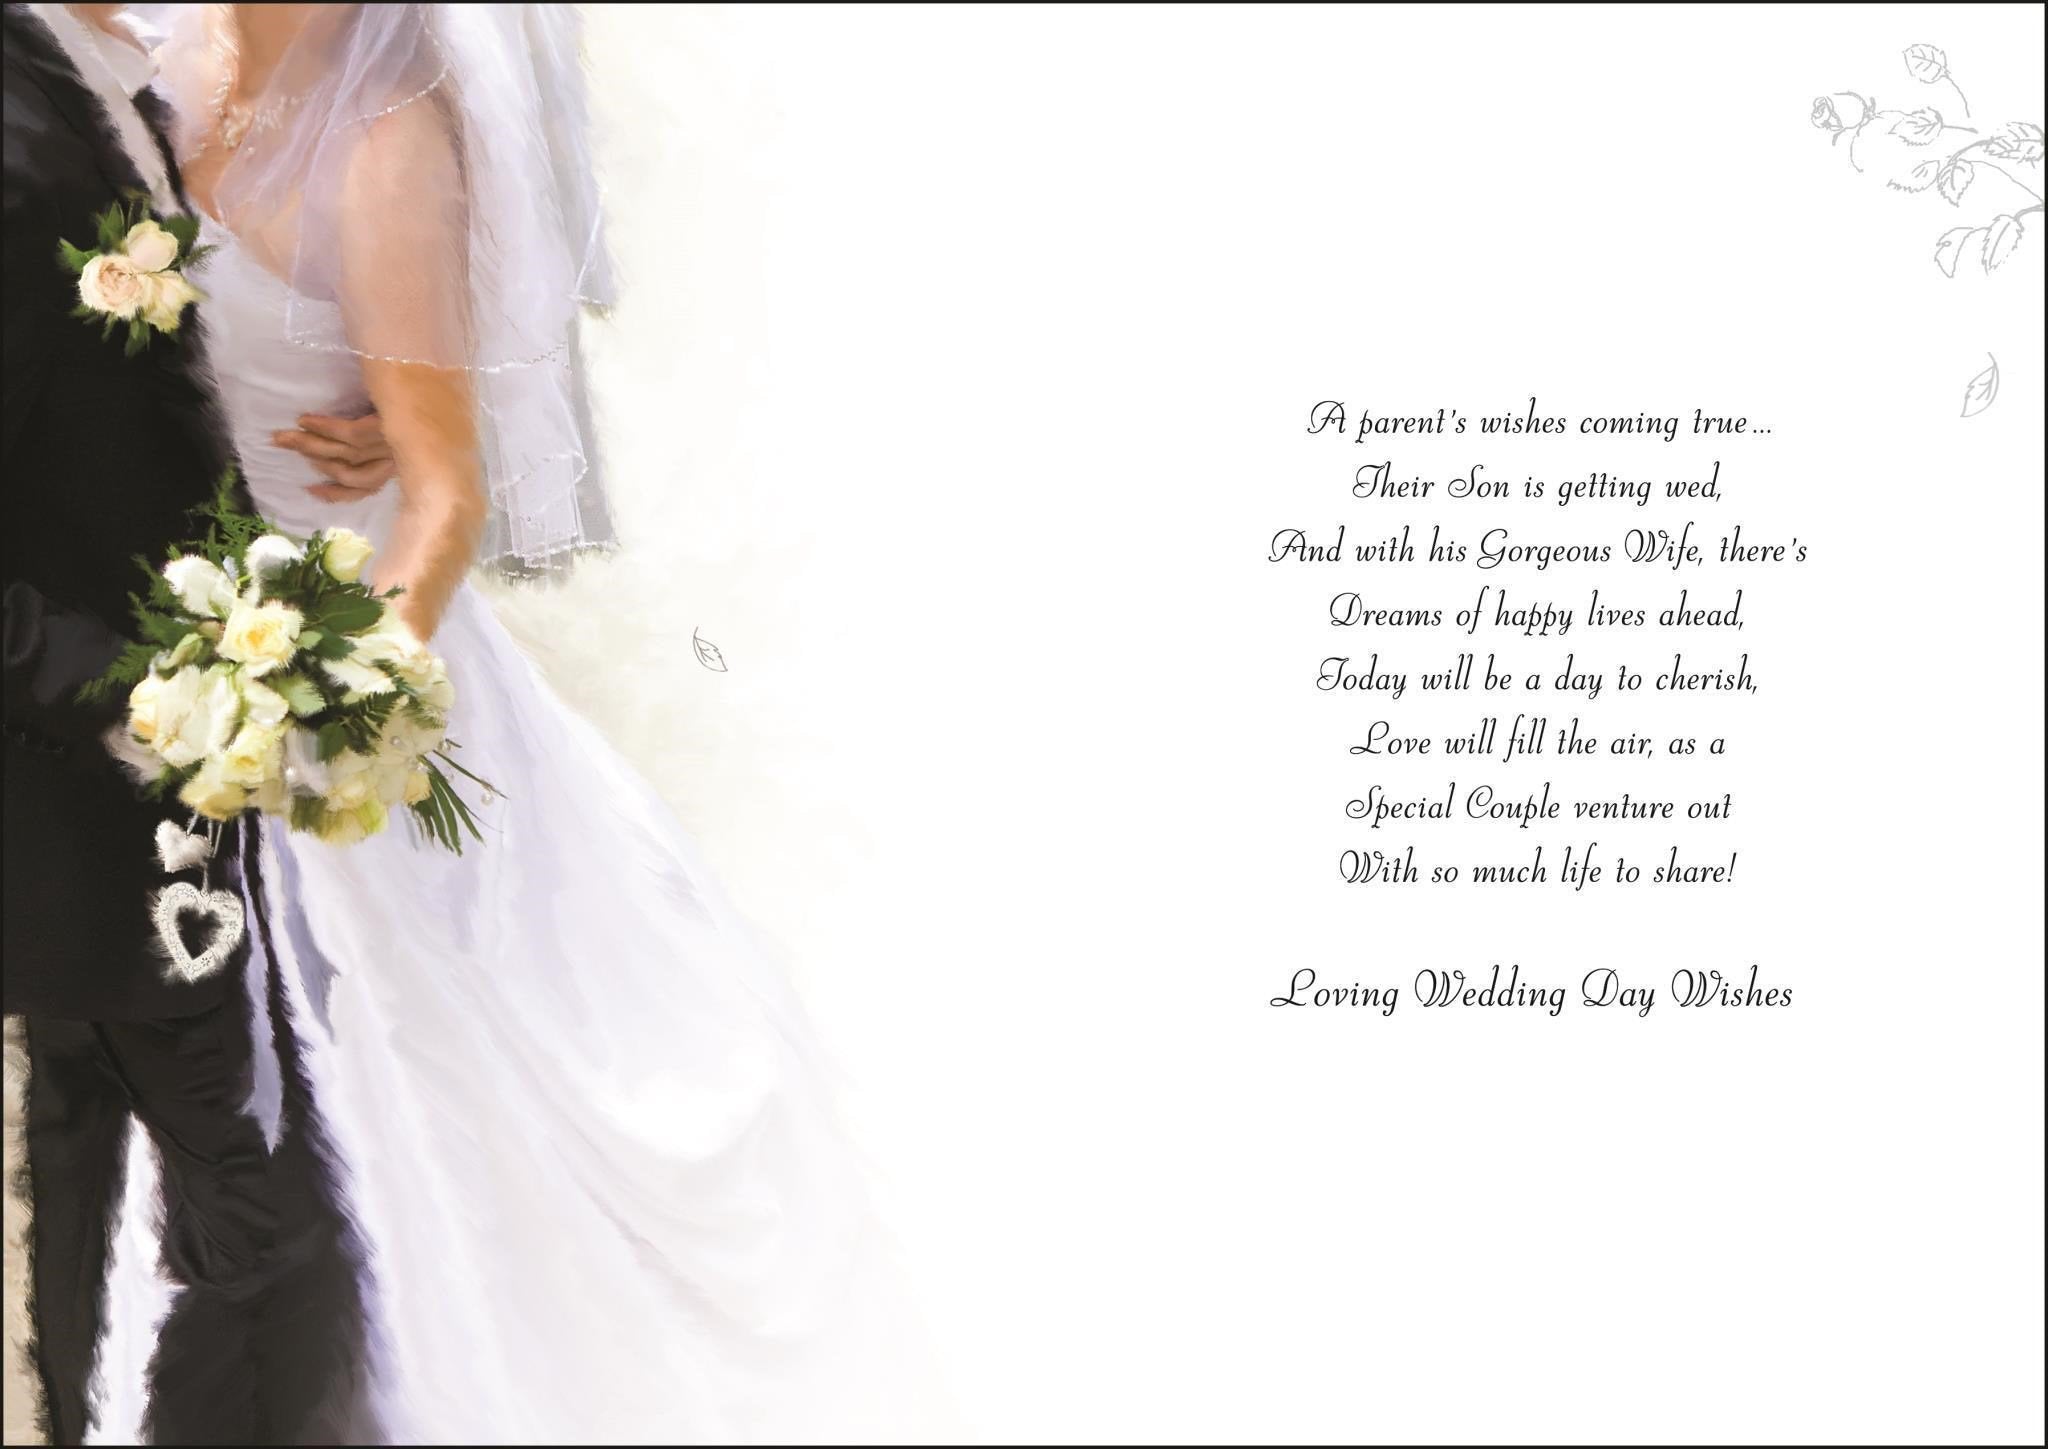 Inside of Wedding Son & DIL Black Suit Greetings Card